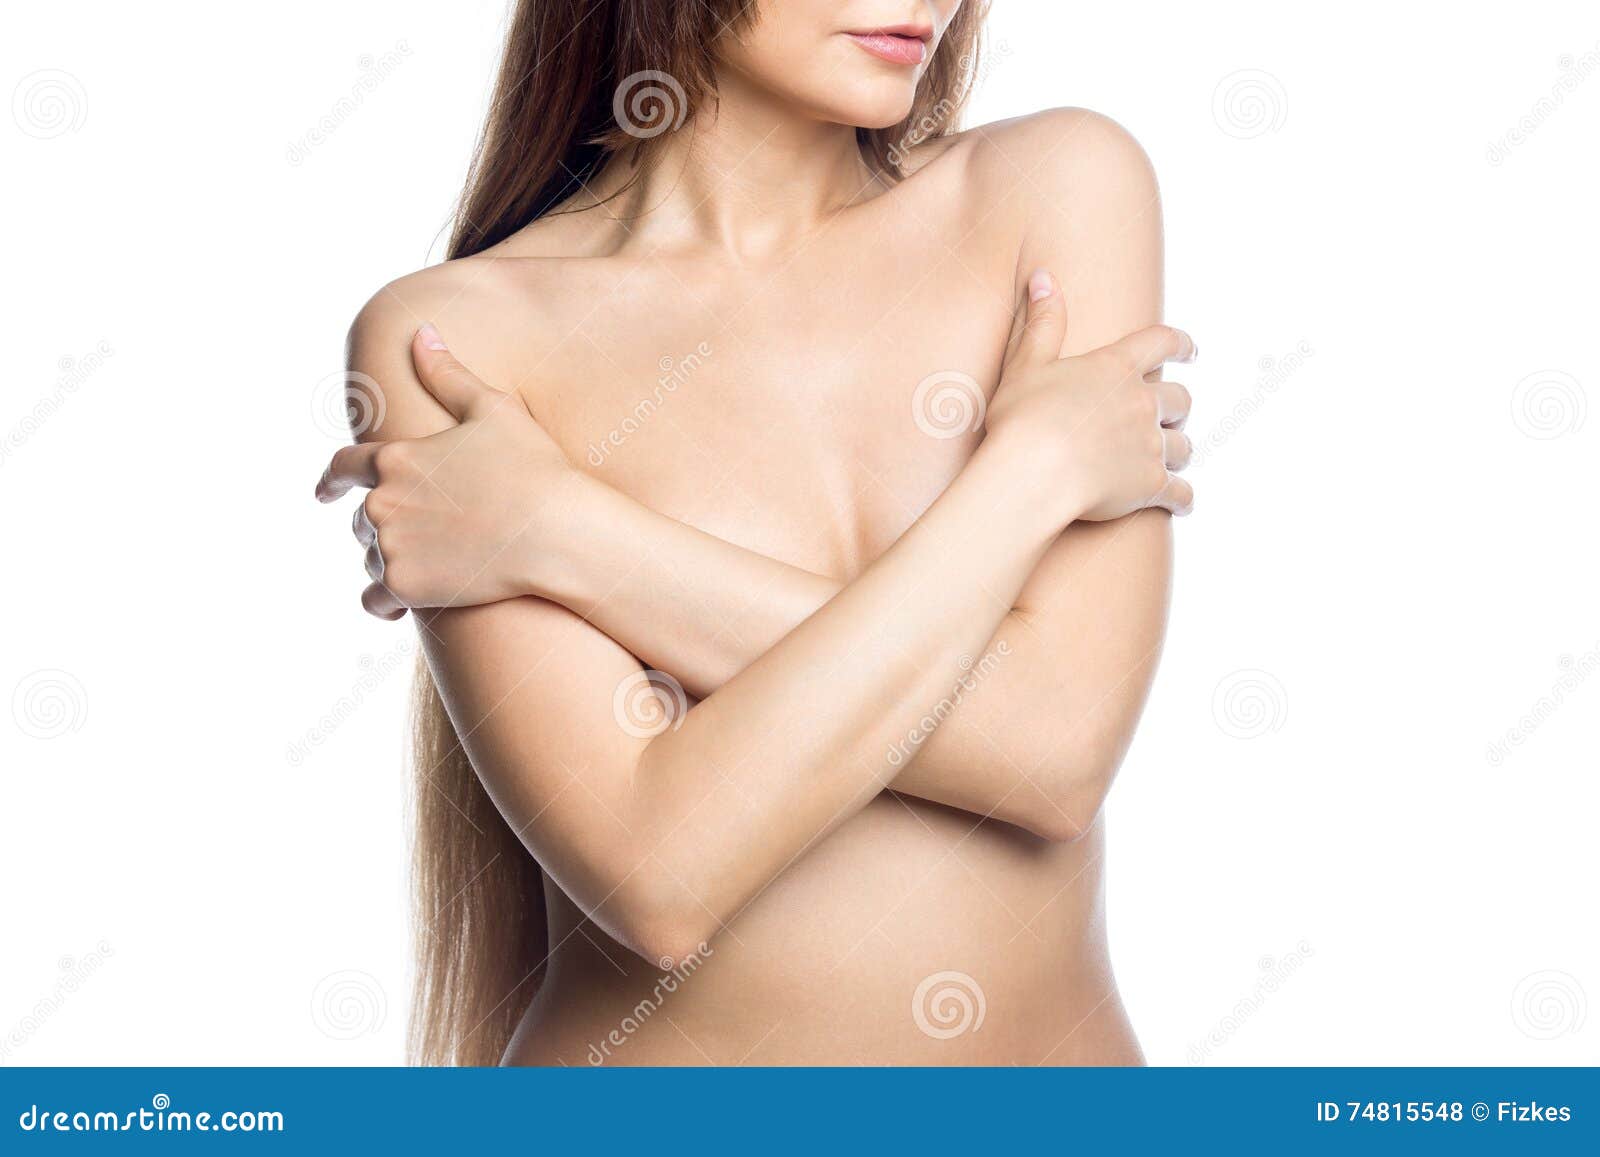 daniel herzberg add naked girl covering boobs photo